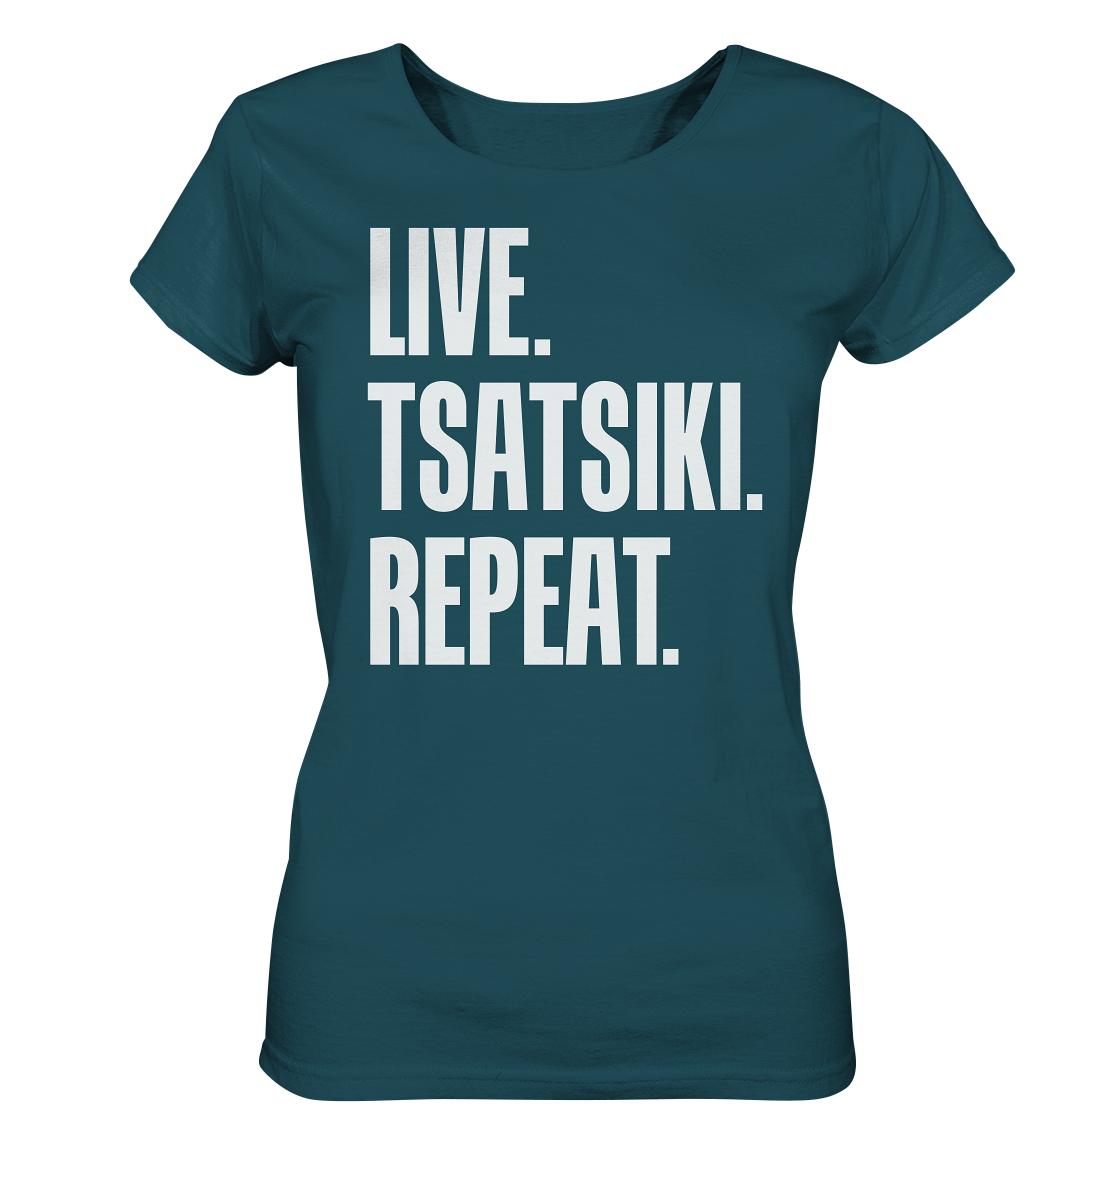 LIVE. TZATZIKI. REPEAT. - Ladies organic shirt